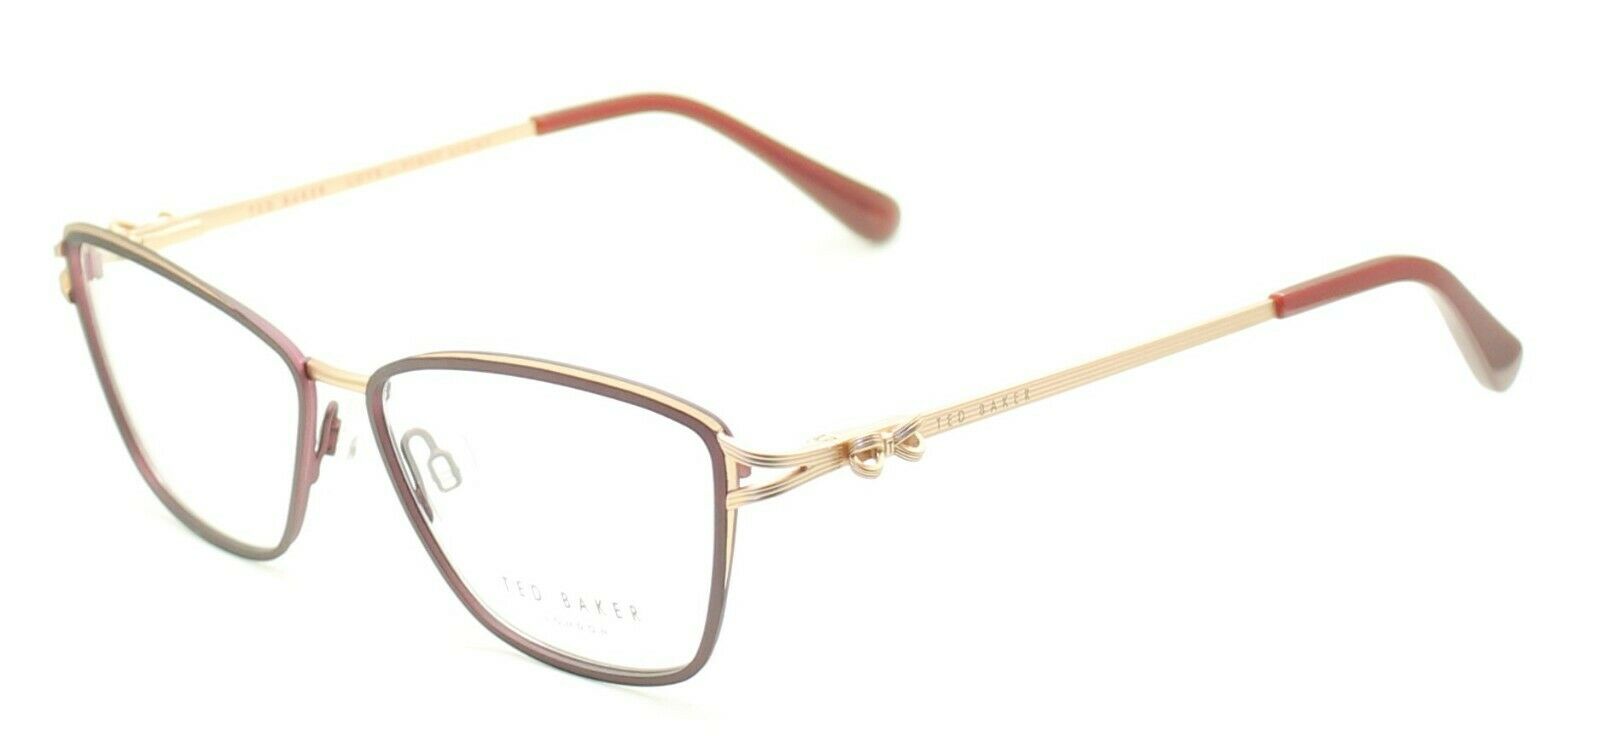 TED BAKER 2245 244 Tula 54mm  Eyewear FRAMES Glasses Eyeglasses RX Optical - New